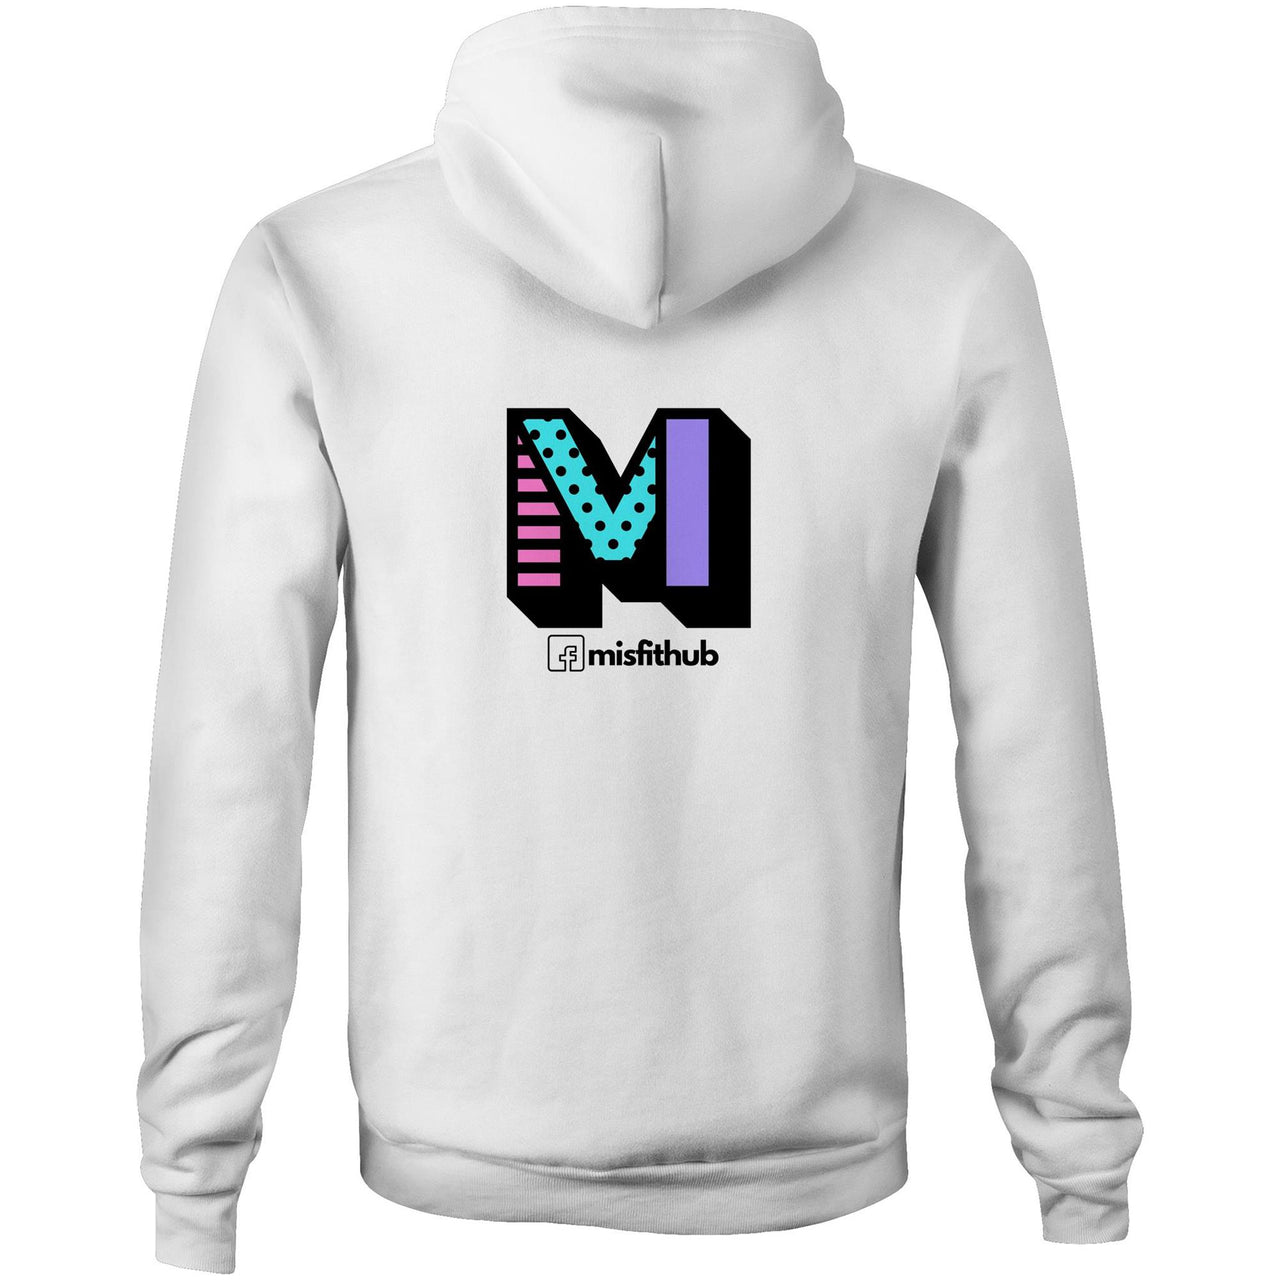 Give Zero F#cks Pocket Hoodie Sweatshirt | Misfit Hub